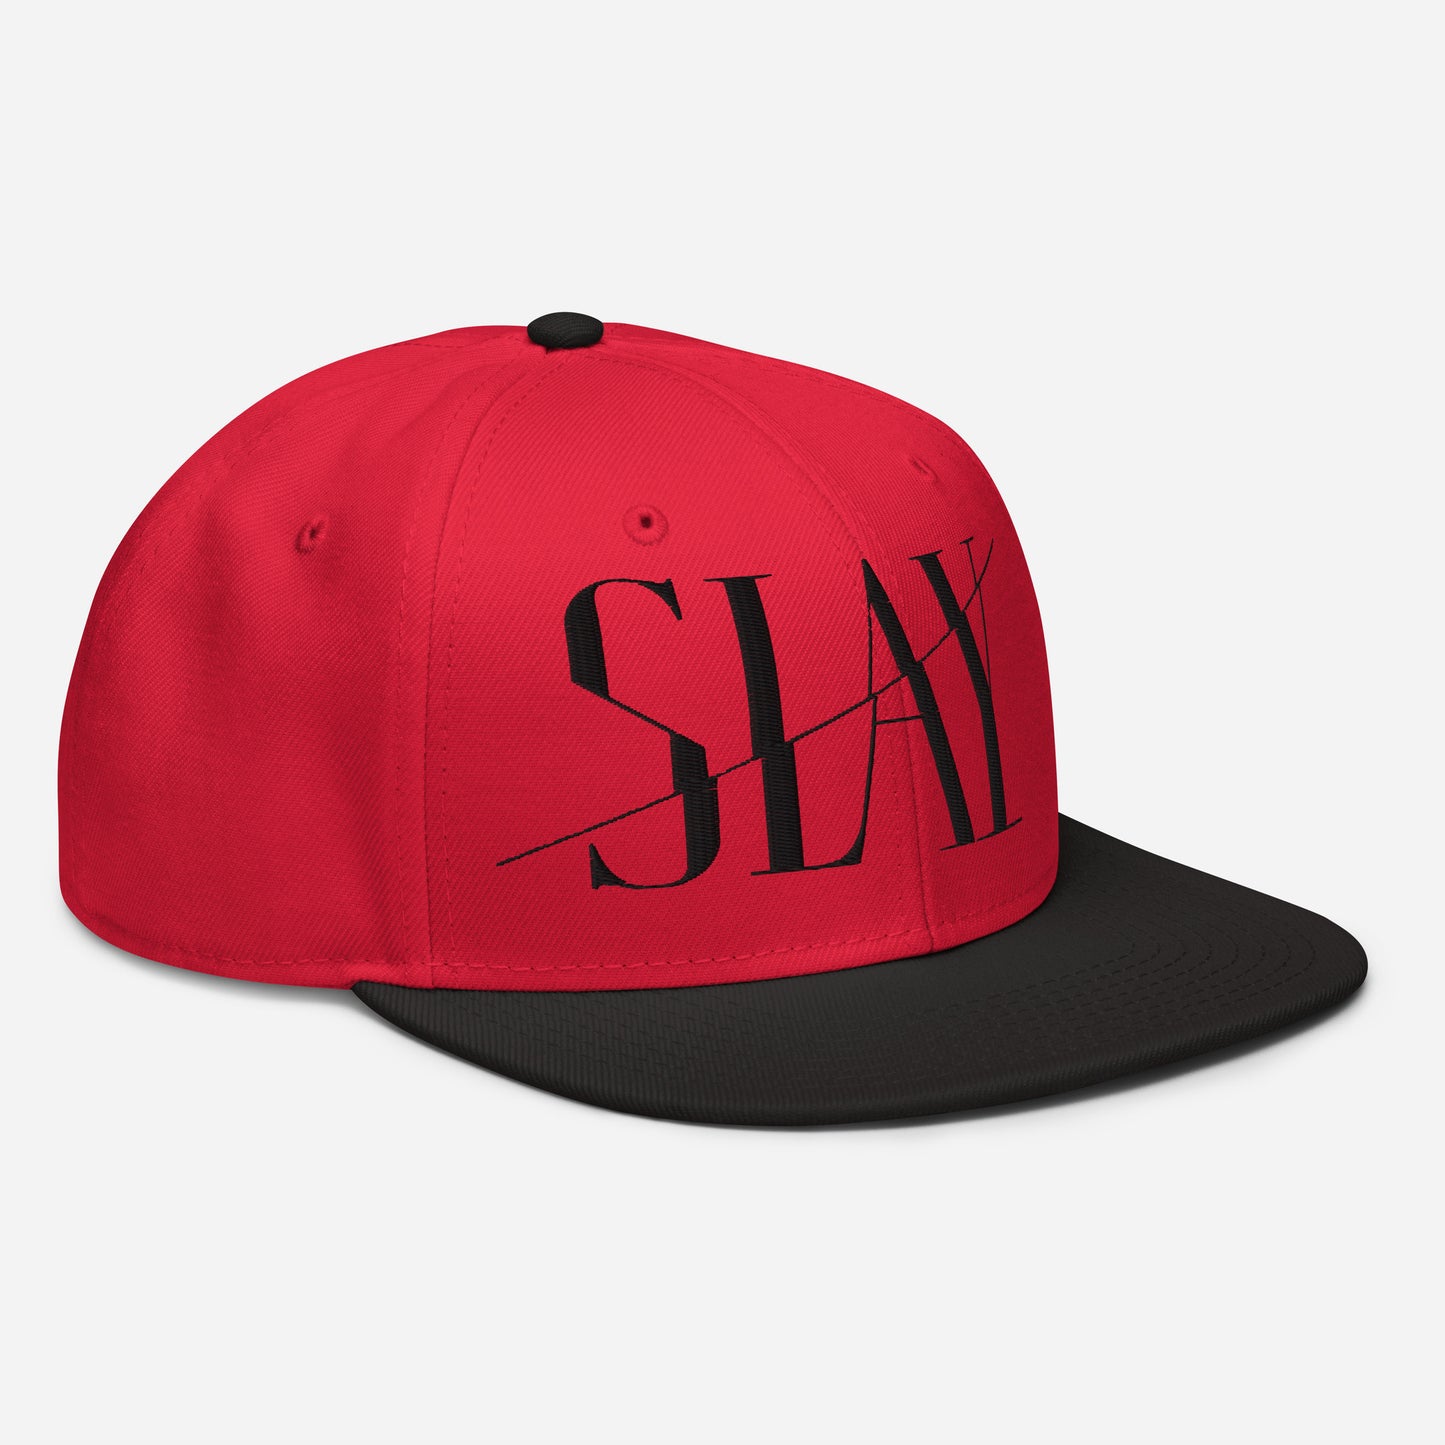 SLAY Wool Blend Snapback Hat